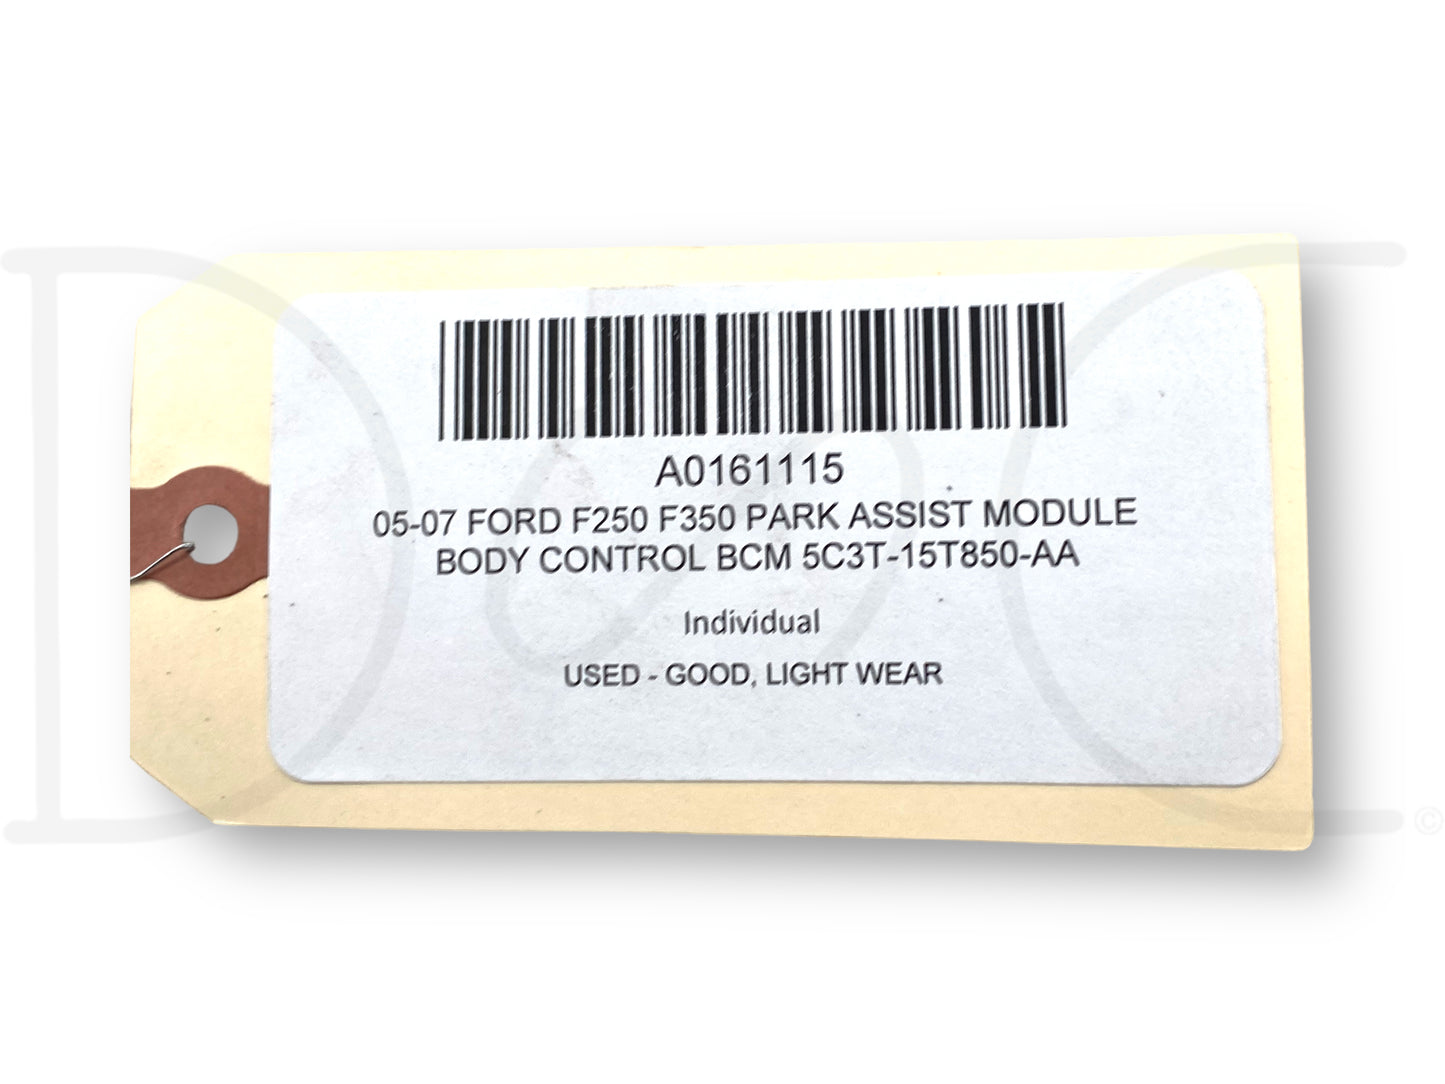 05-07 Ford F250 F350 Park Assist Module Body Control BCM 5C3T-15T850-Aa